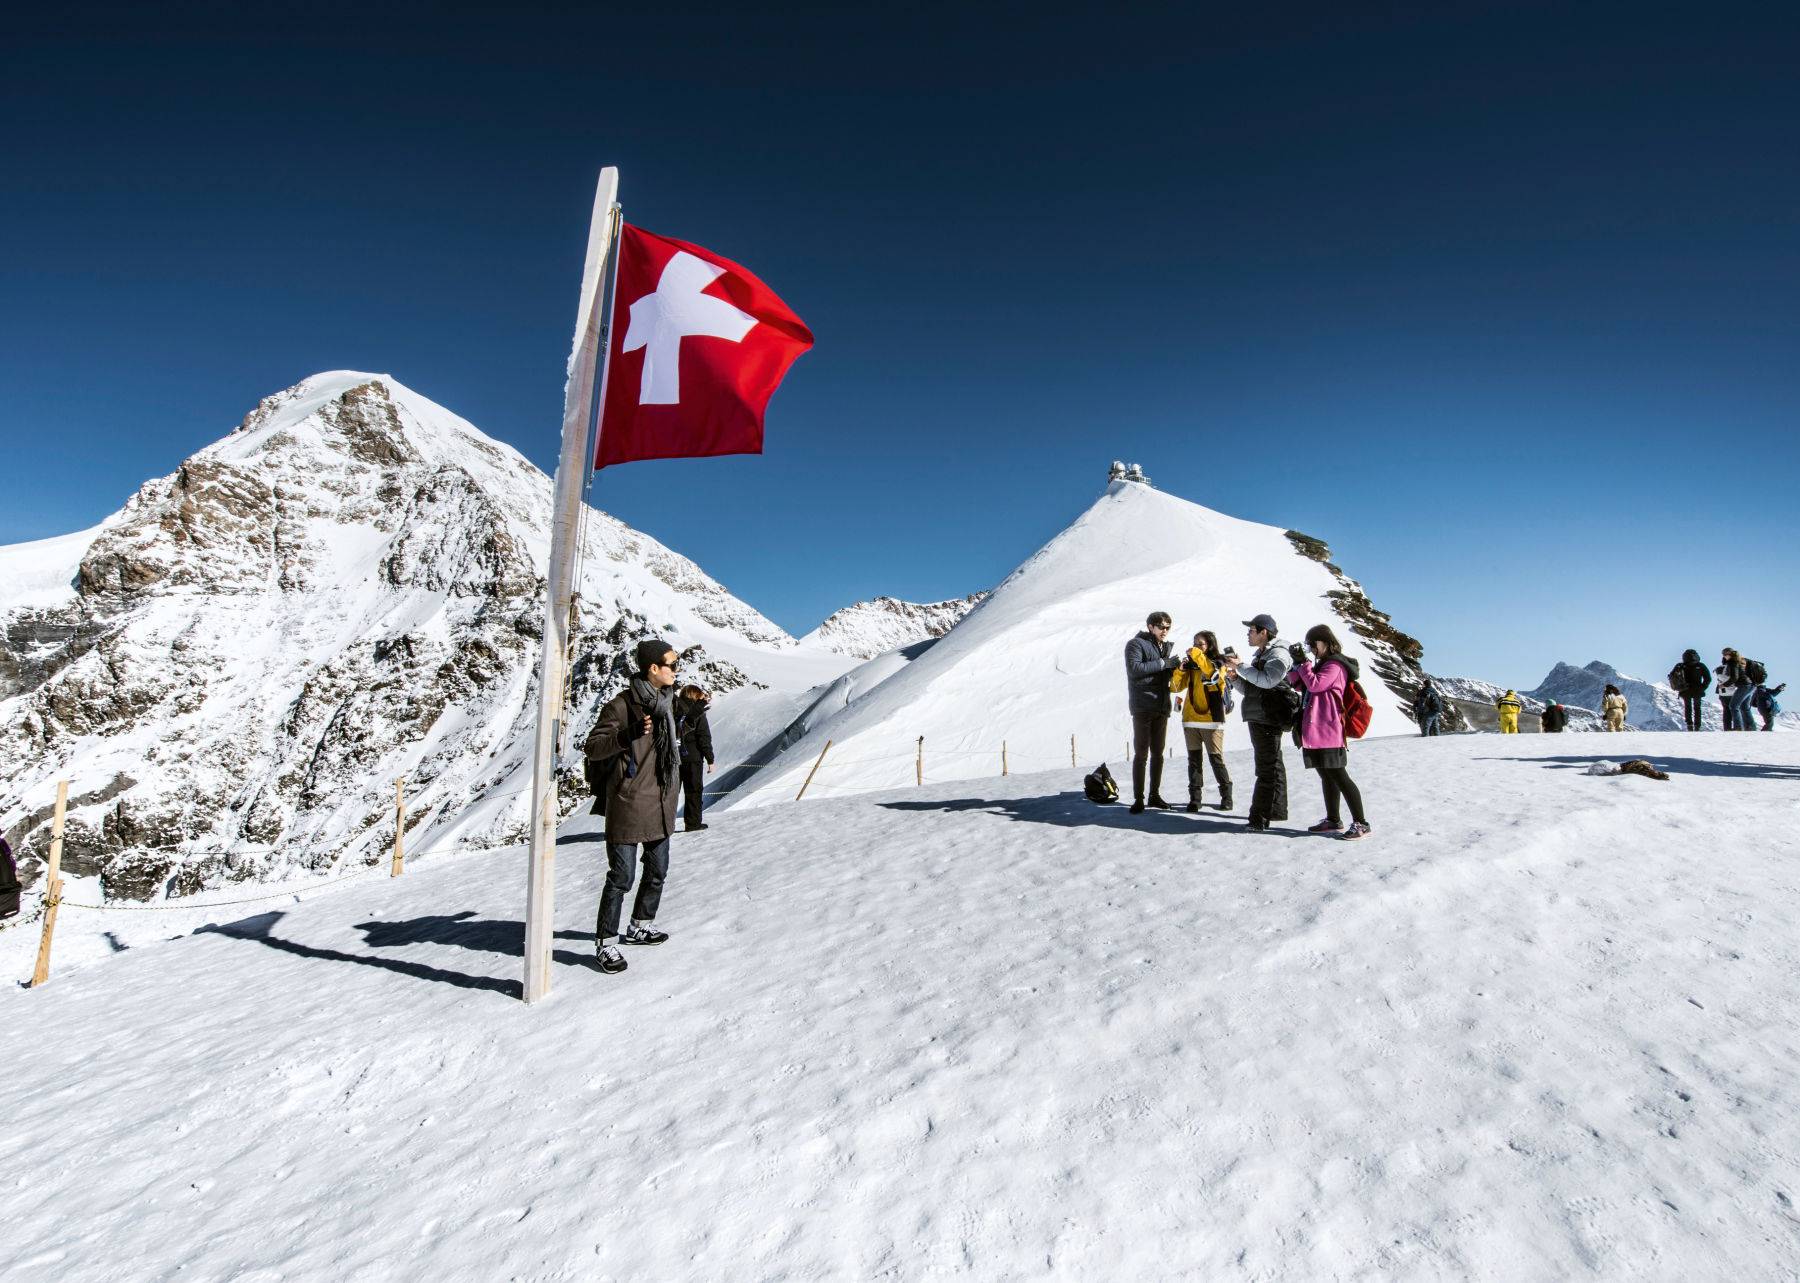 ver neve em jungfraujoch na suiça